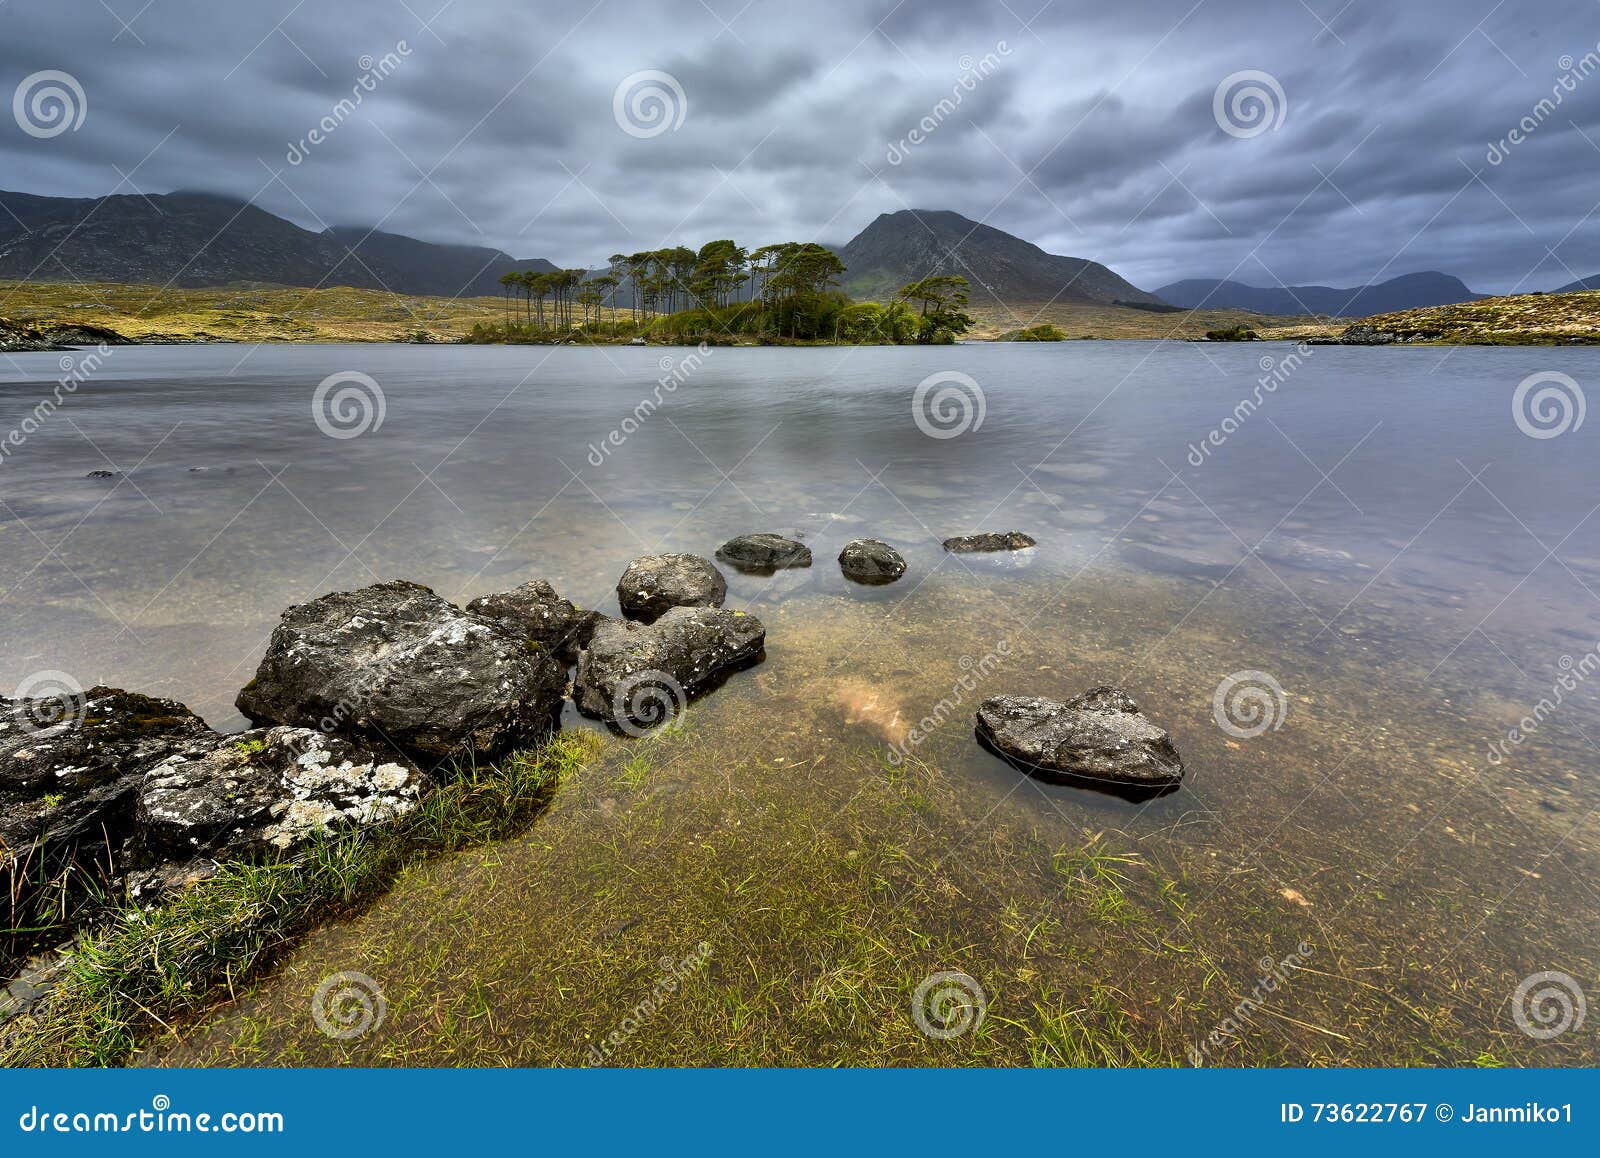 connemara lake and mountains in co. mayo, ireland